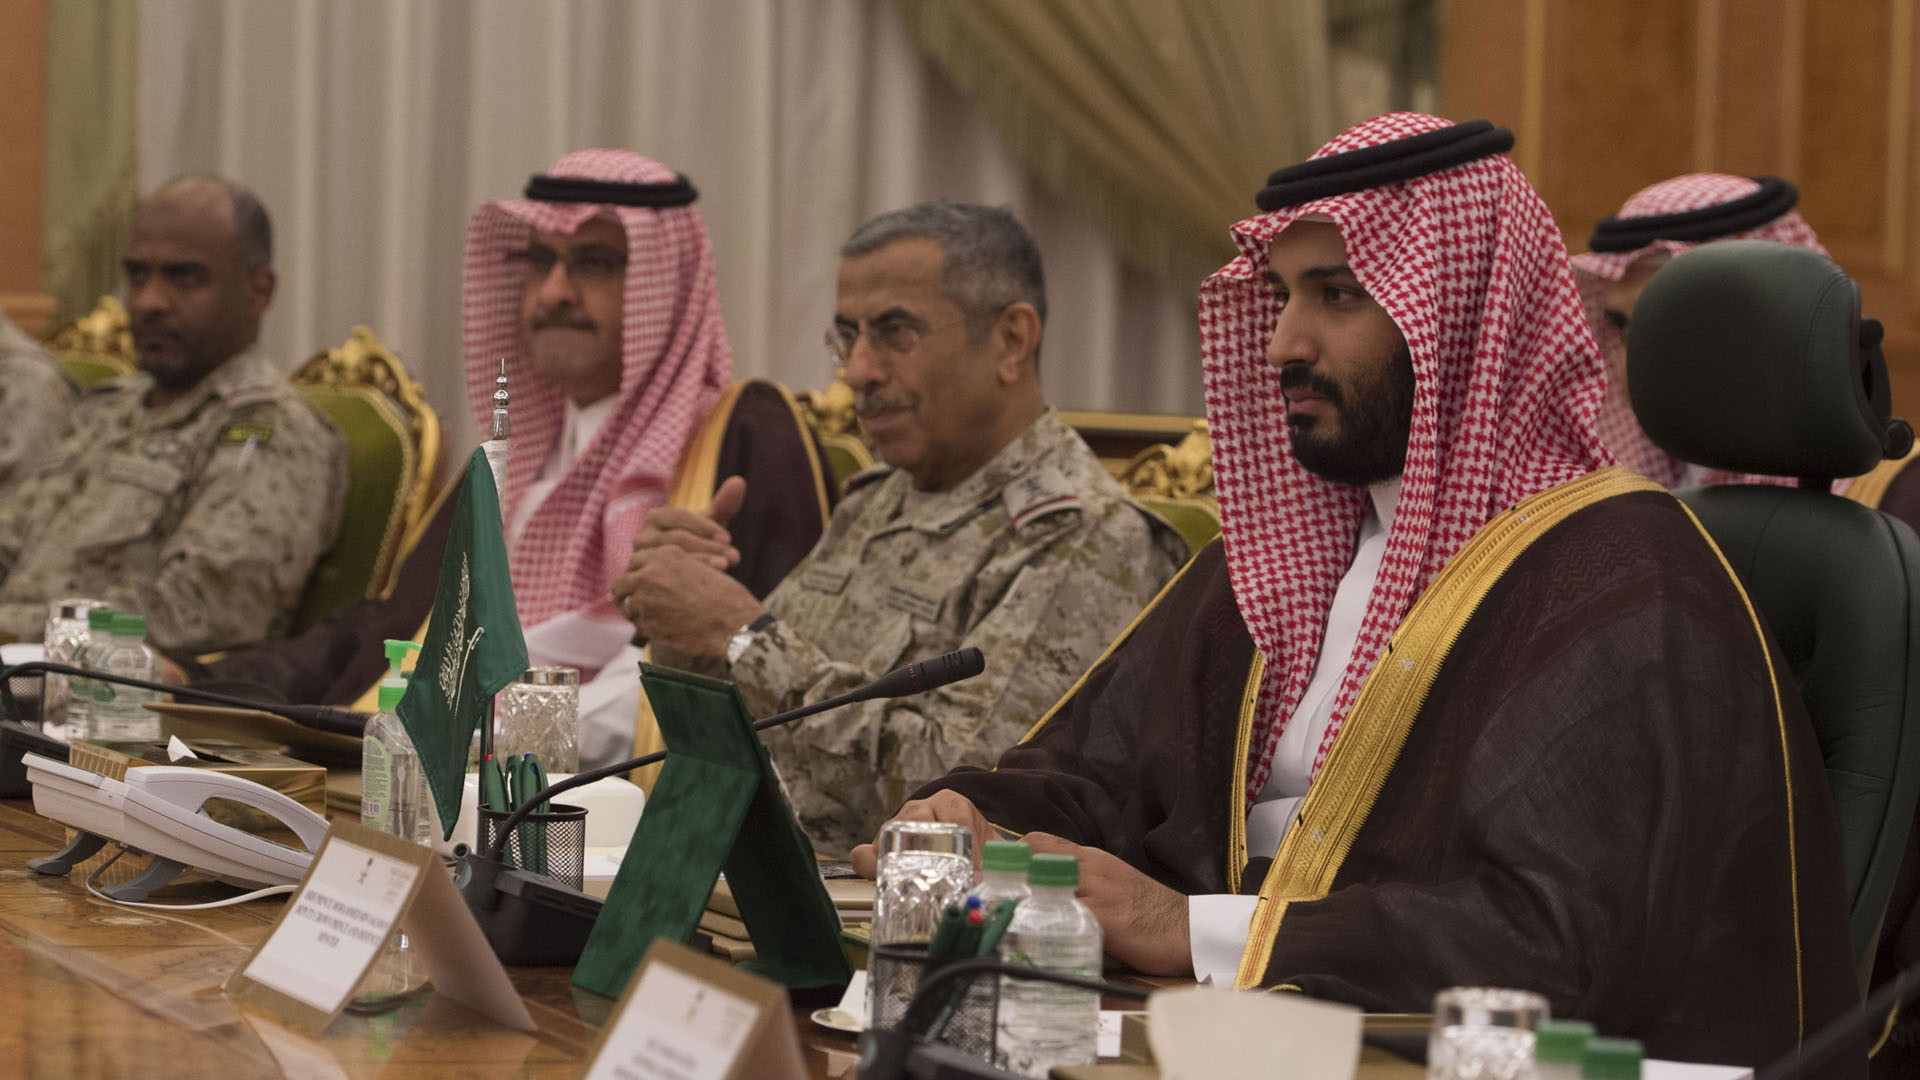 Möchte sein Land zukunftsfähig machen: Saudi-Arabiens erster Kronprinz Mohammed Bin Salman, rechts im Bild